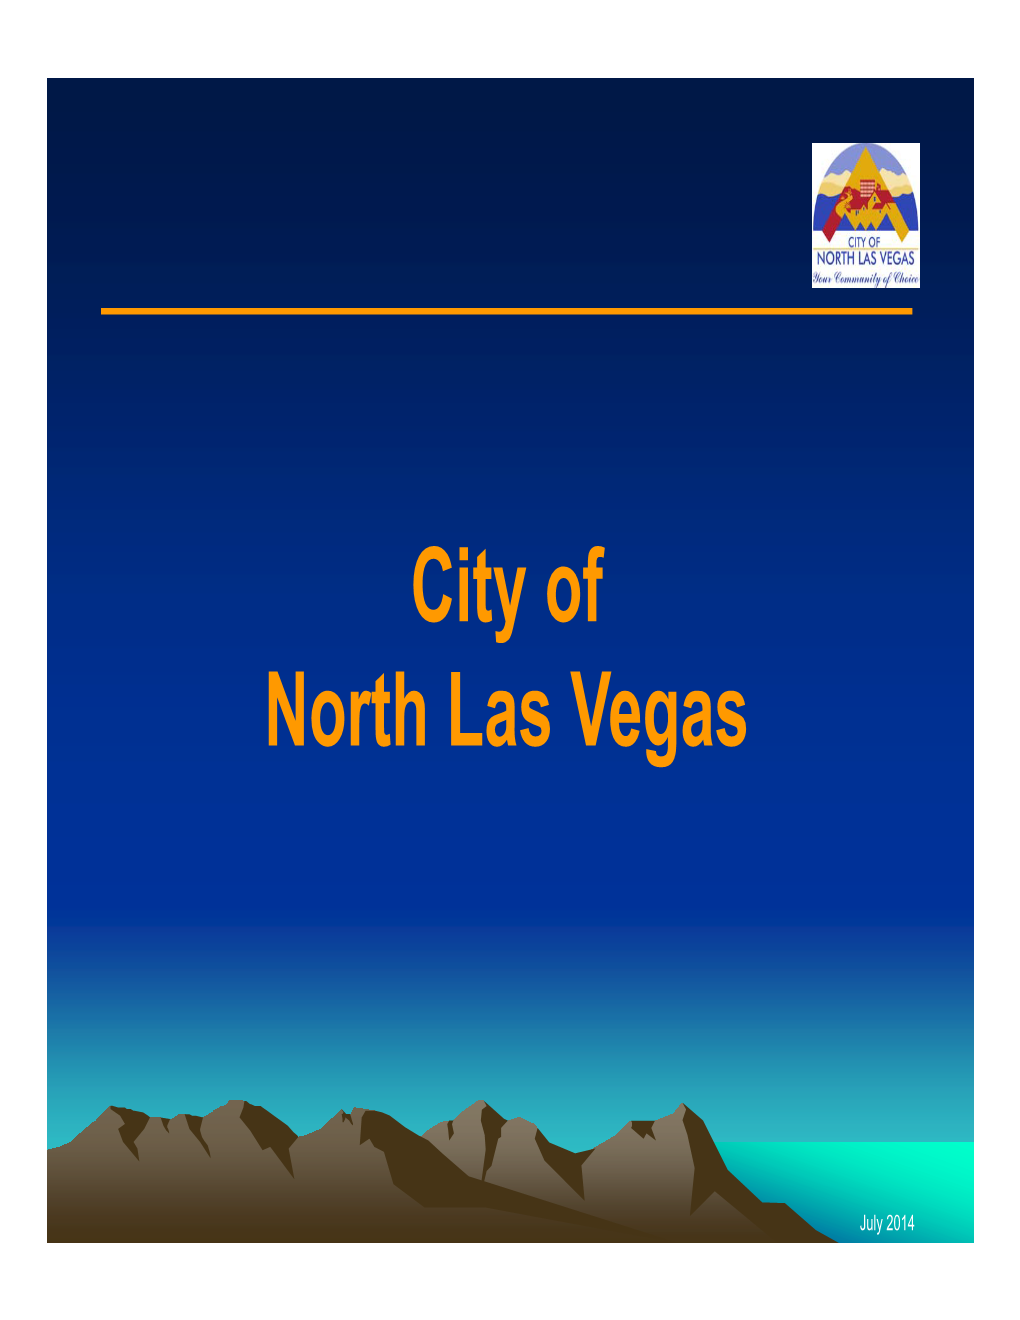 North Las Vegas Facts